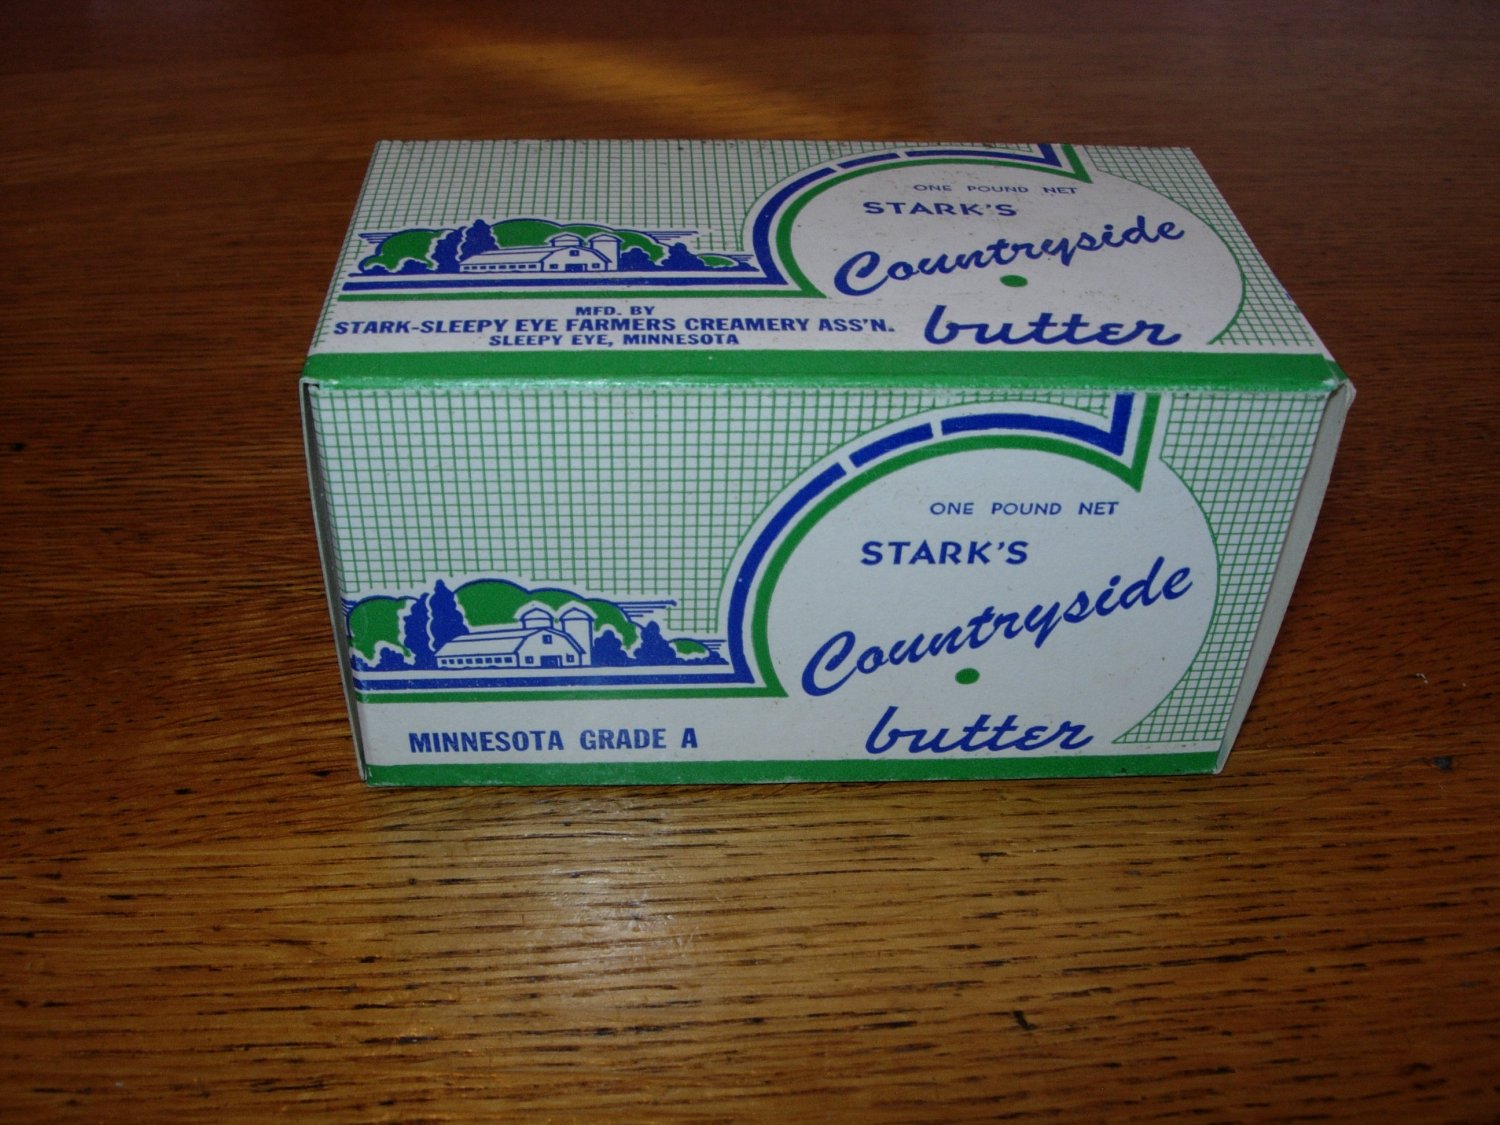 Stark's Countryside Butter Box    Stark-Sleepy Eye Farmers Creamery Ass'n. Minnesota